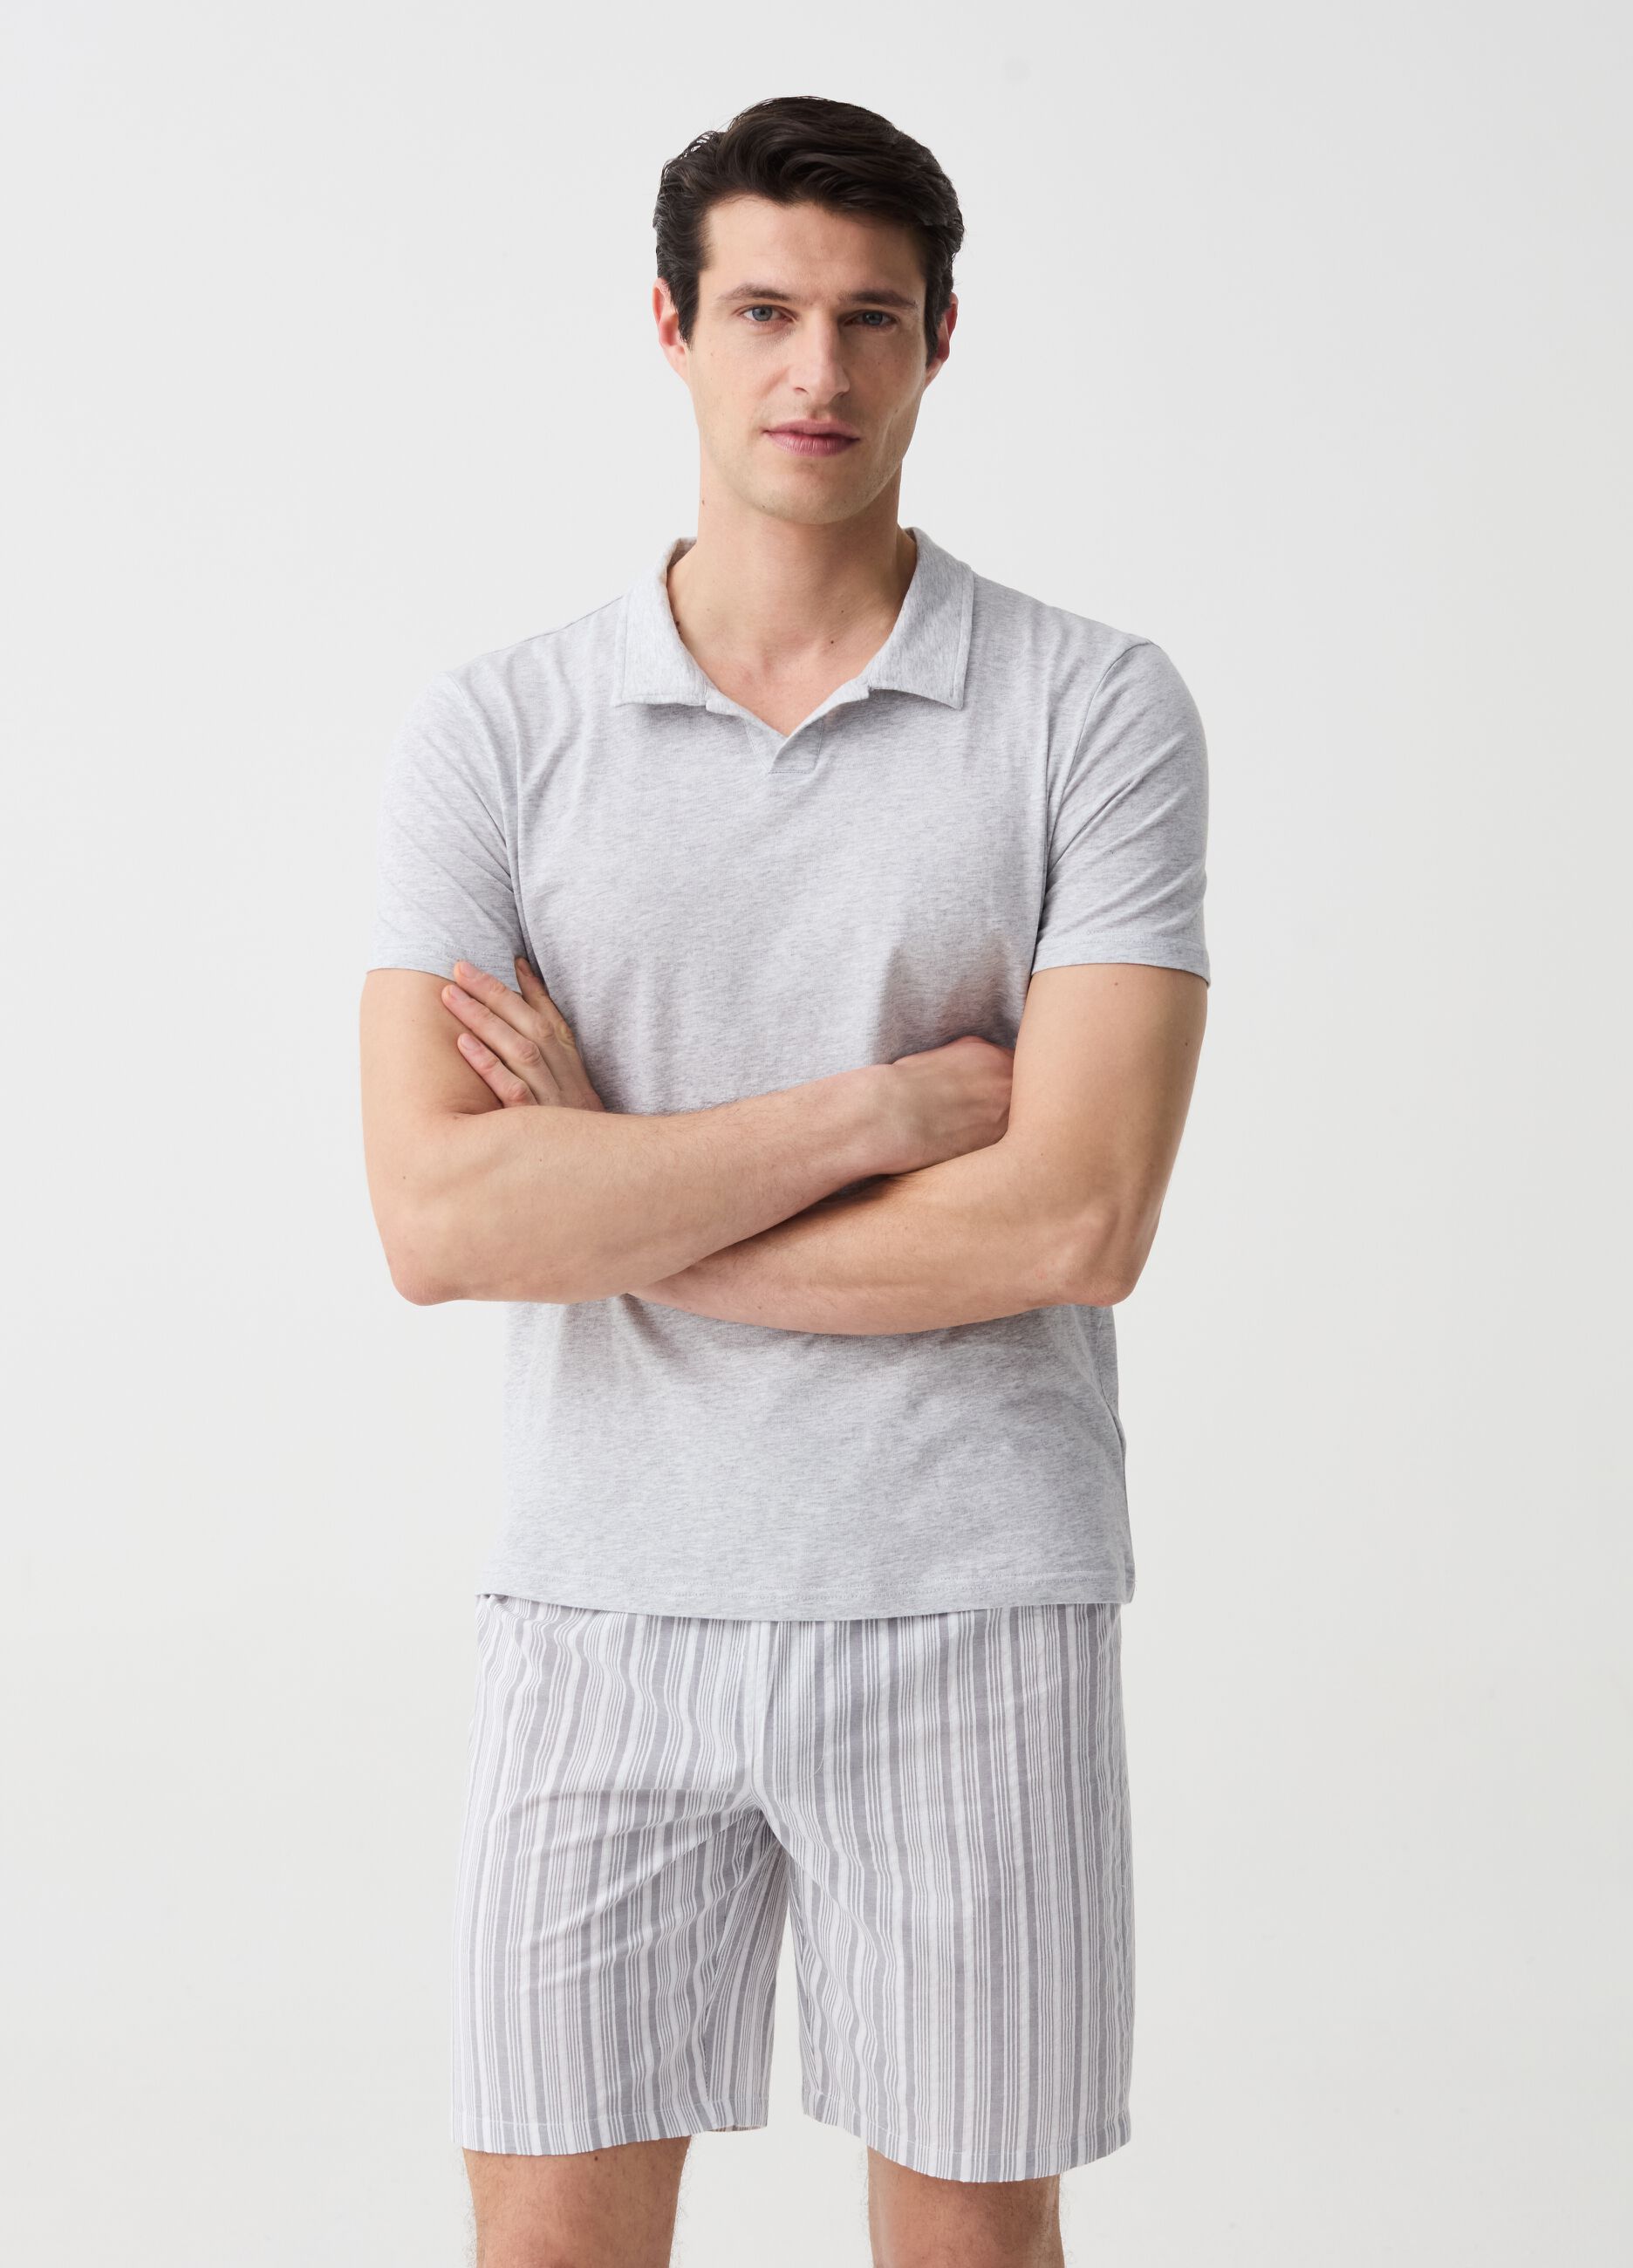 Short pyjama top with polo neck